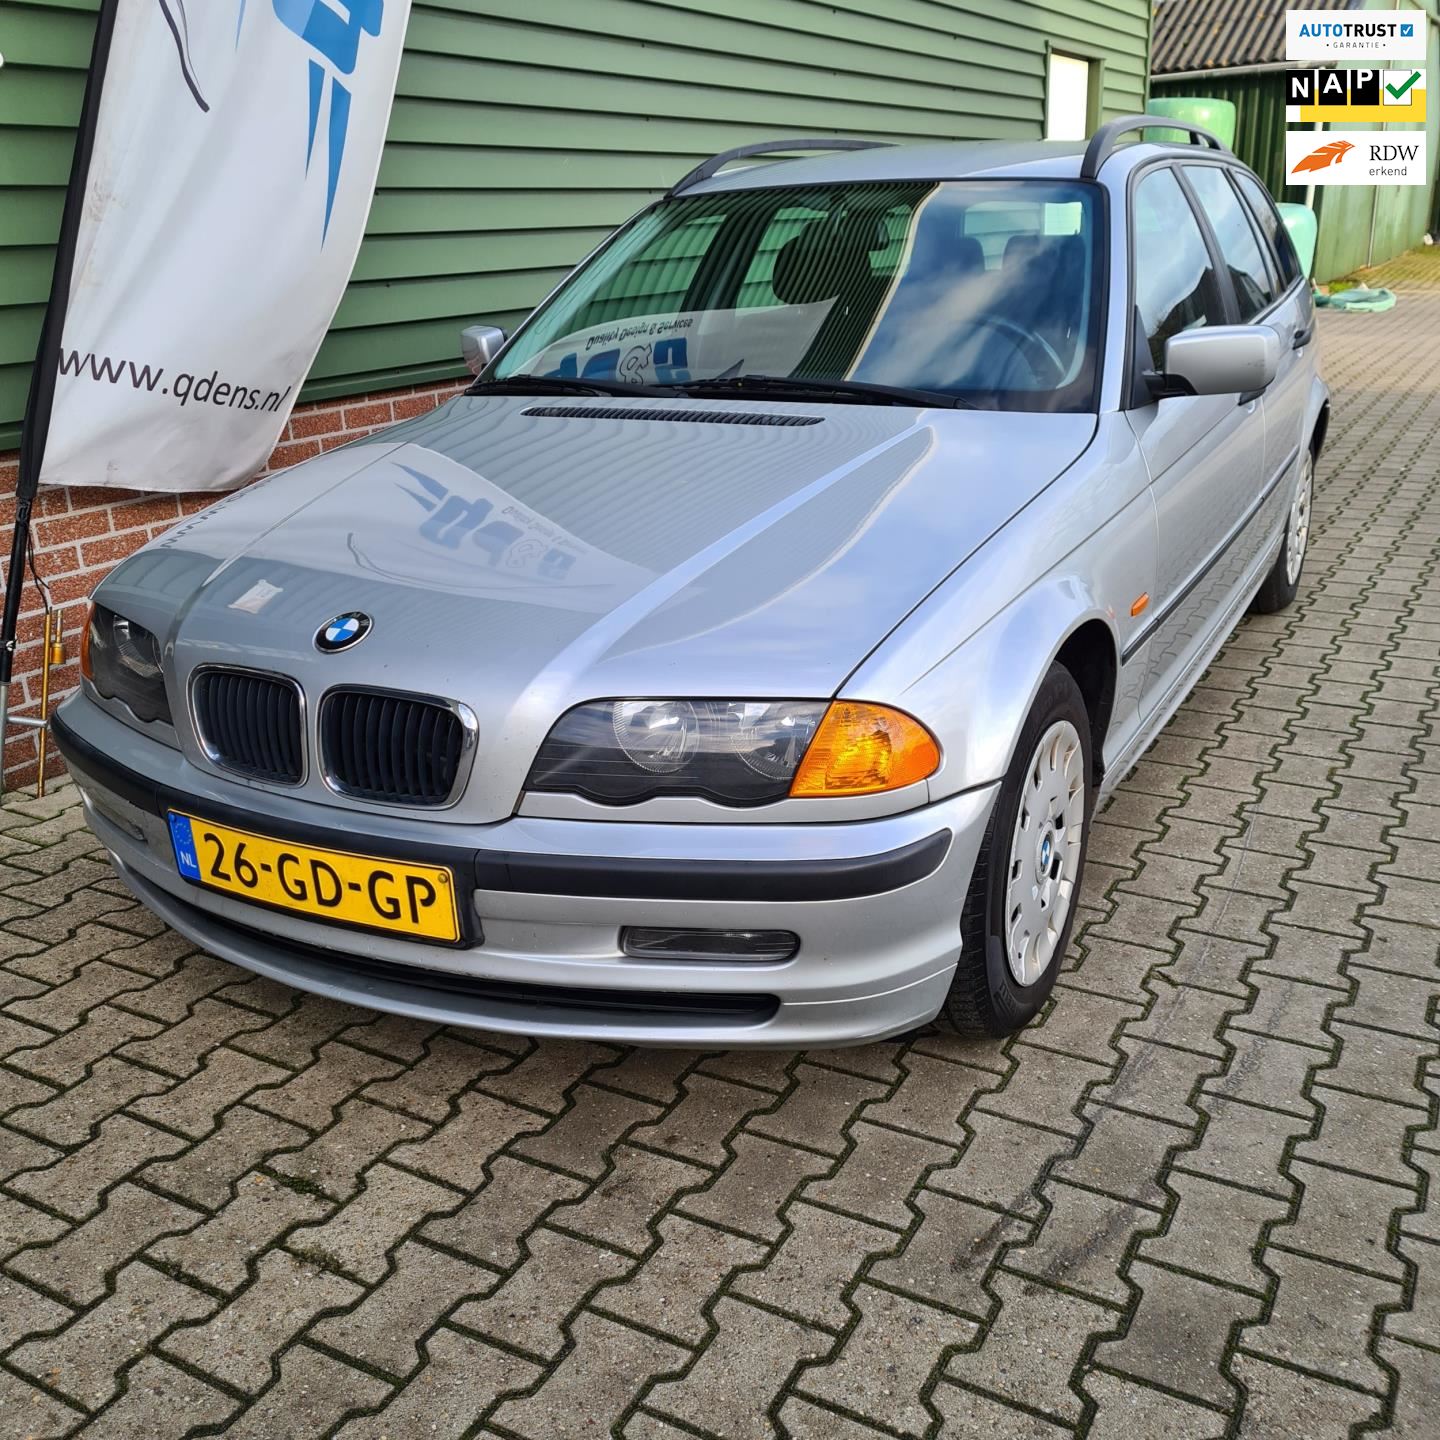 koud Mechanica Dragende cirkel BMW 3-serie Touring - 318i Benzine uit 2000 - www.qdens.nl